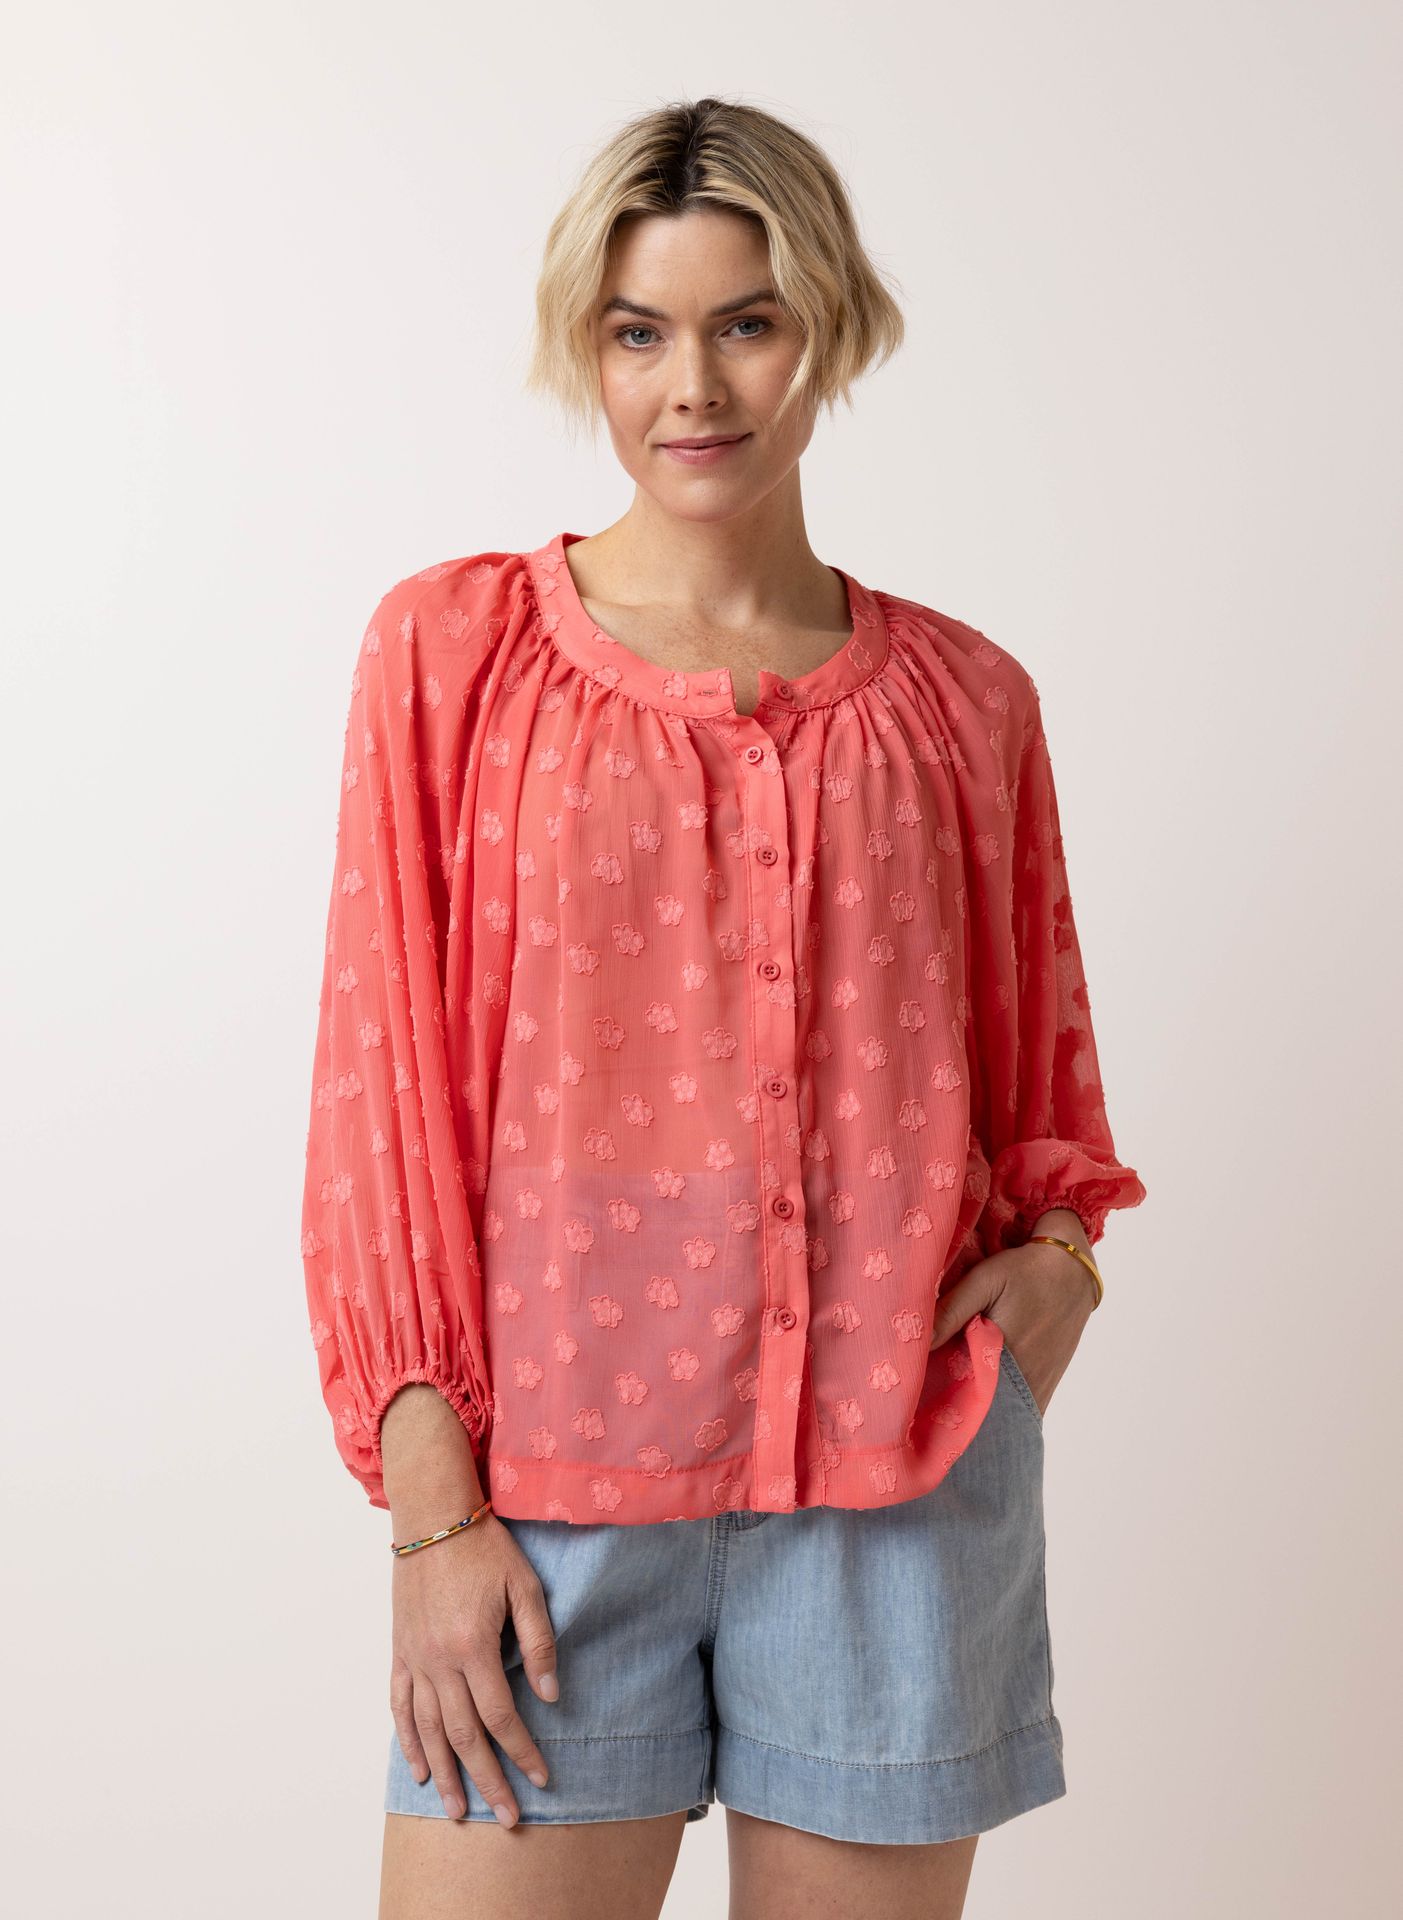 Norah Roze blouse pink 214641-900